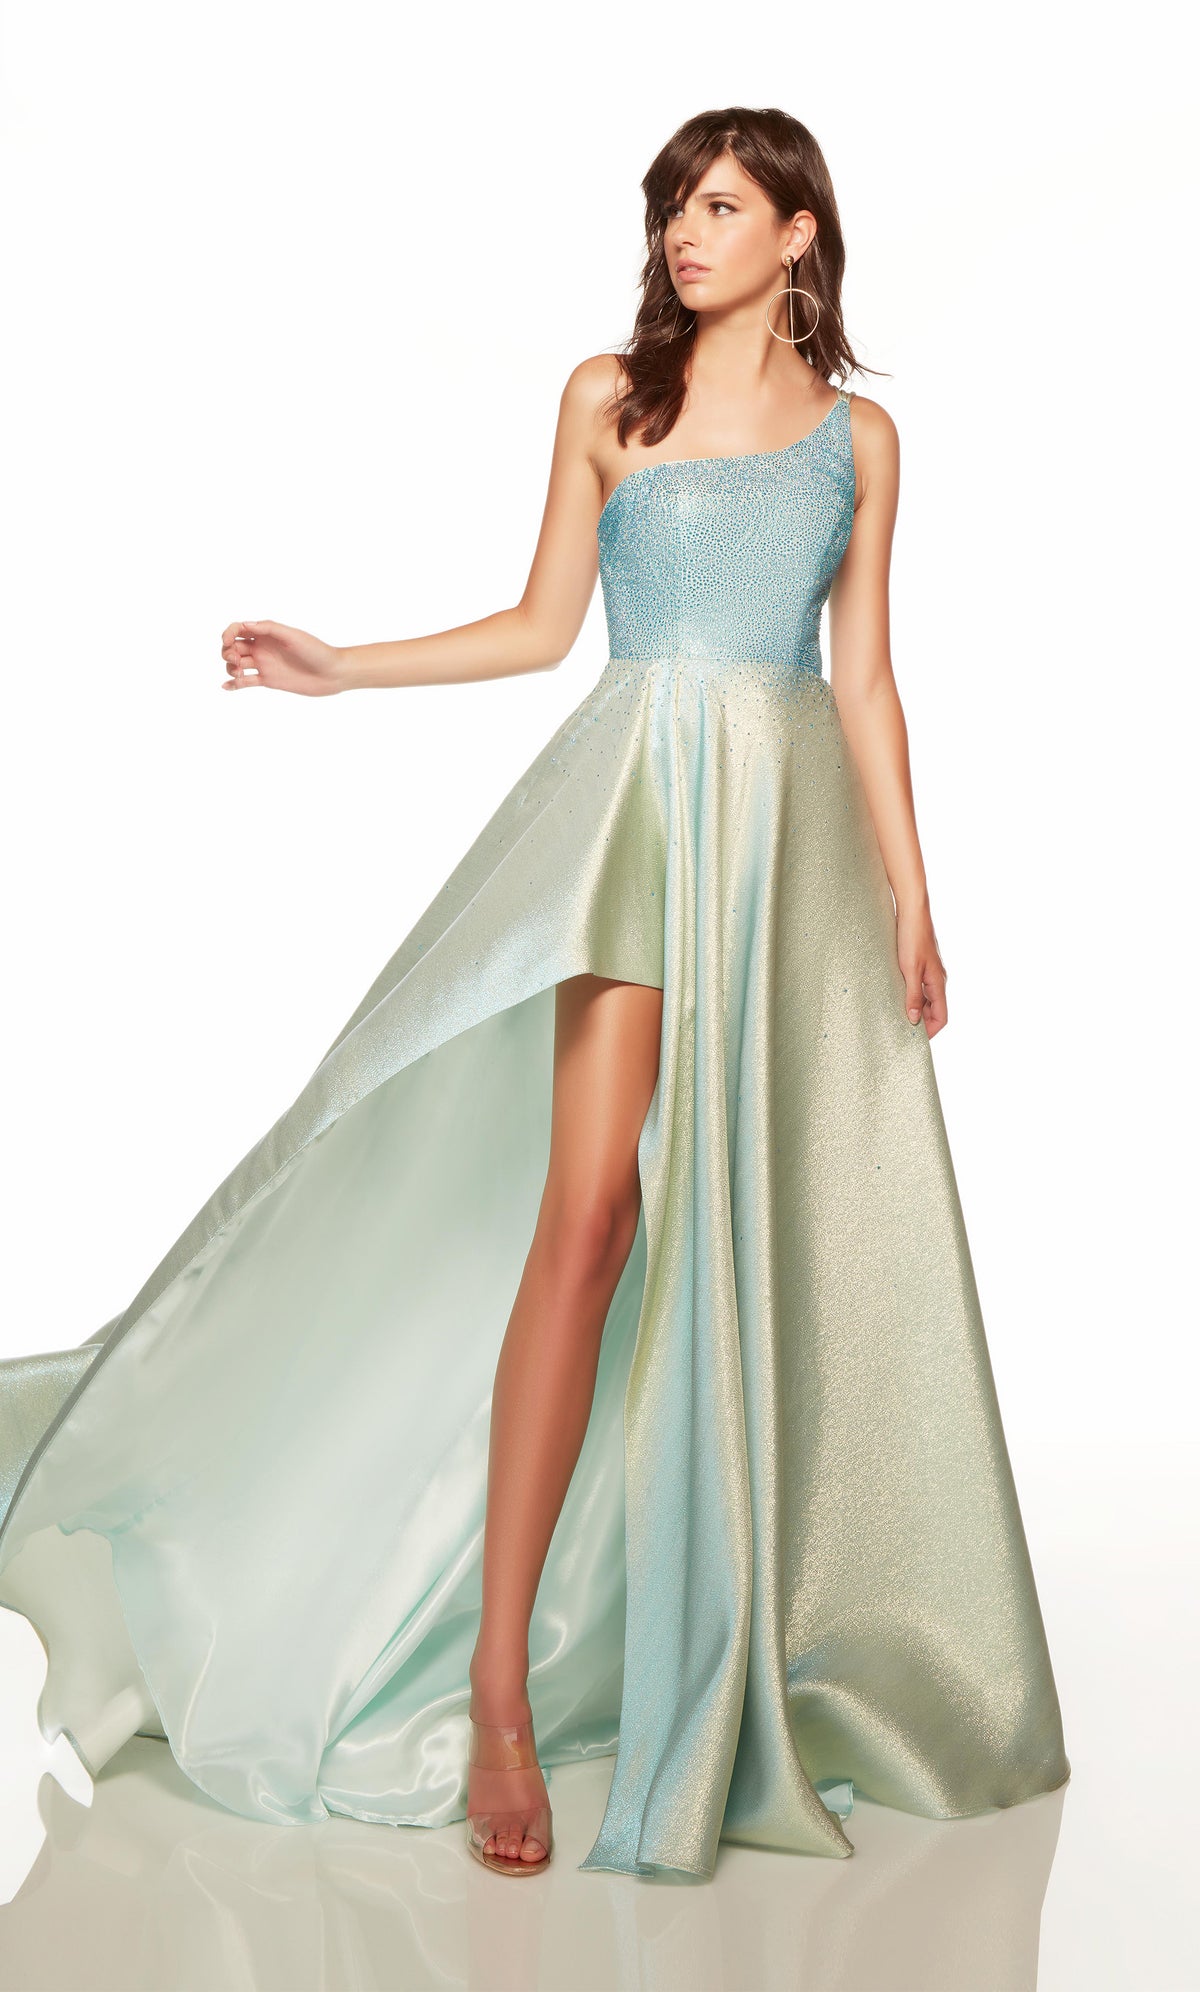  Blue-gold one shoulder prom dress with front slit. COLOR-SWATCH_1772__BLUE-GOLD